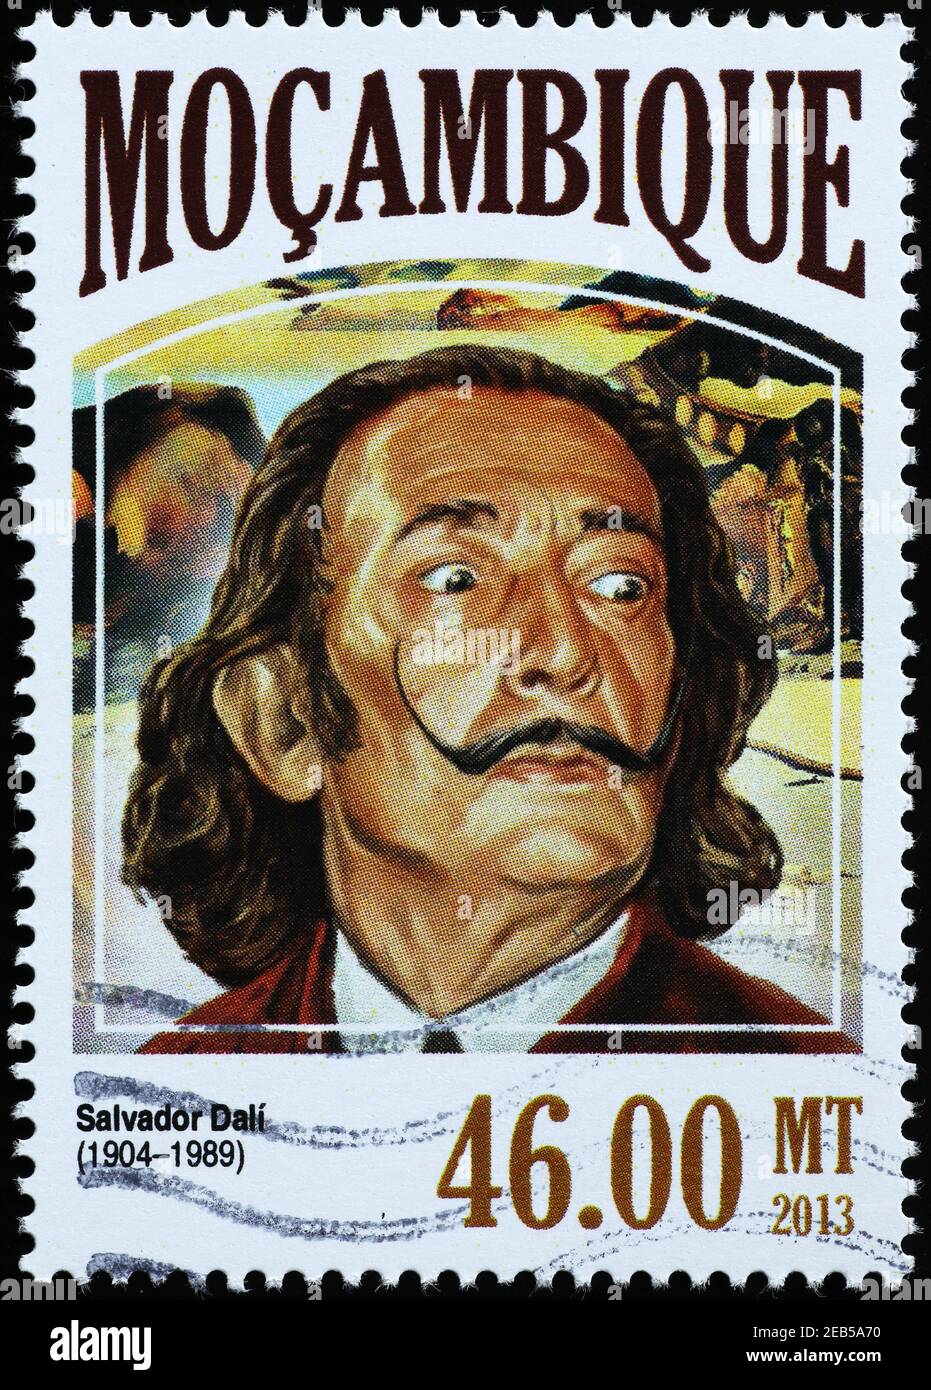 Salvador Dalì portrait on postage stamp Stock Photo